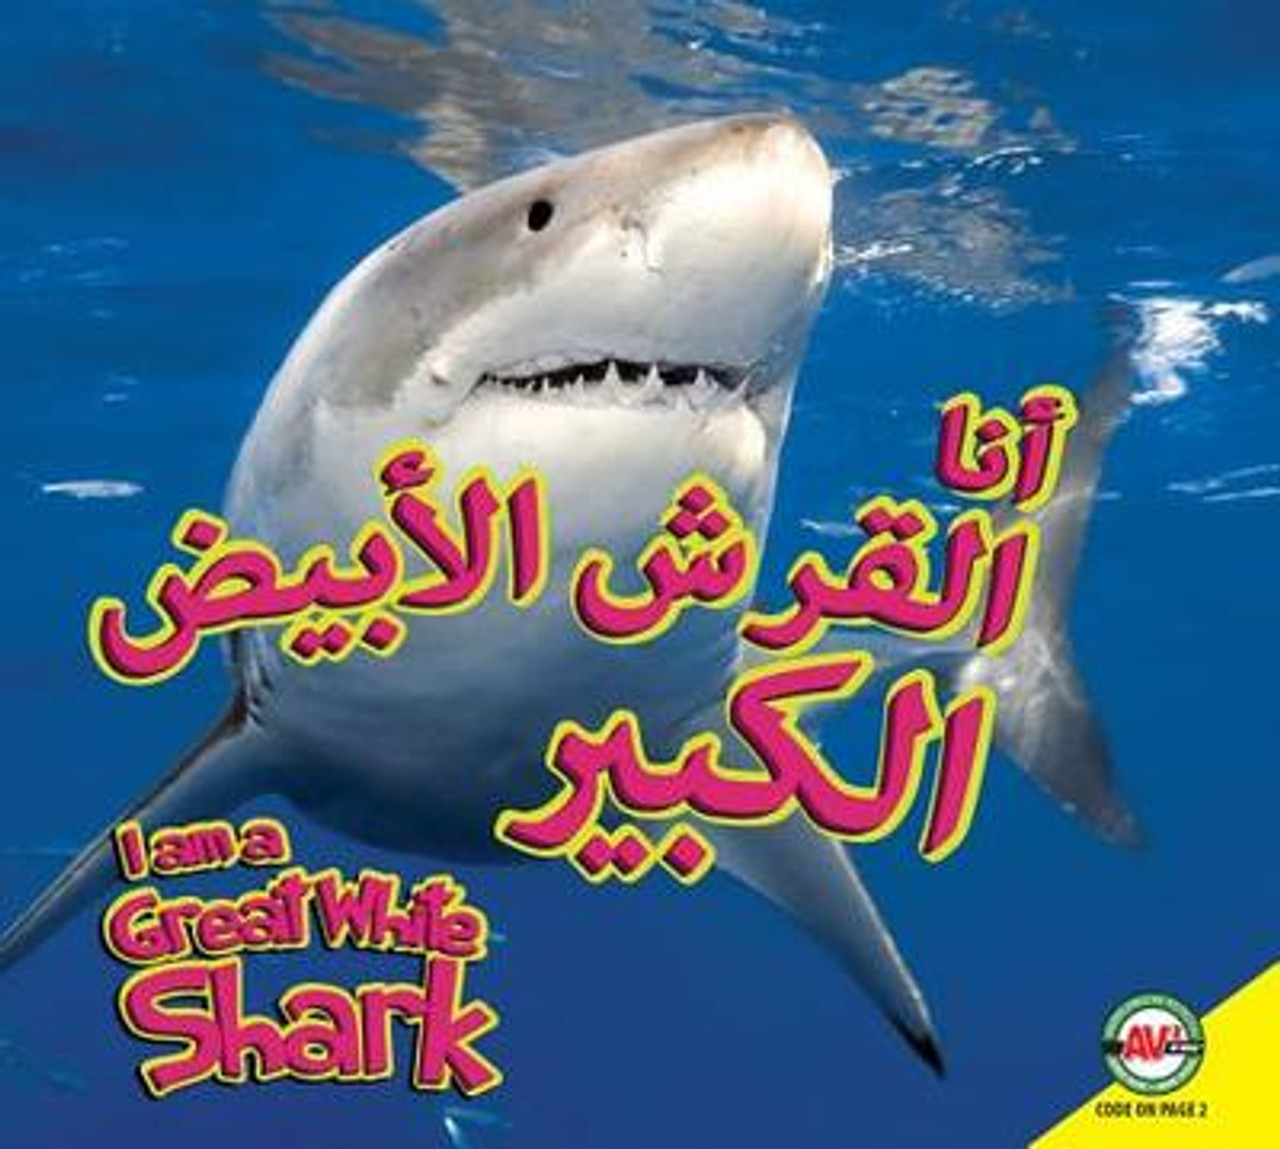 I Am a Great White Shark (Arabic) by Karen Durrie